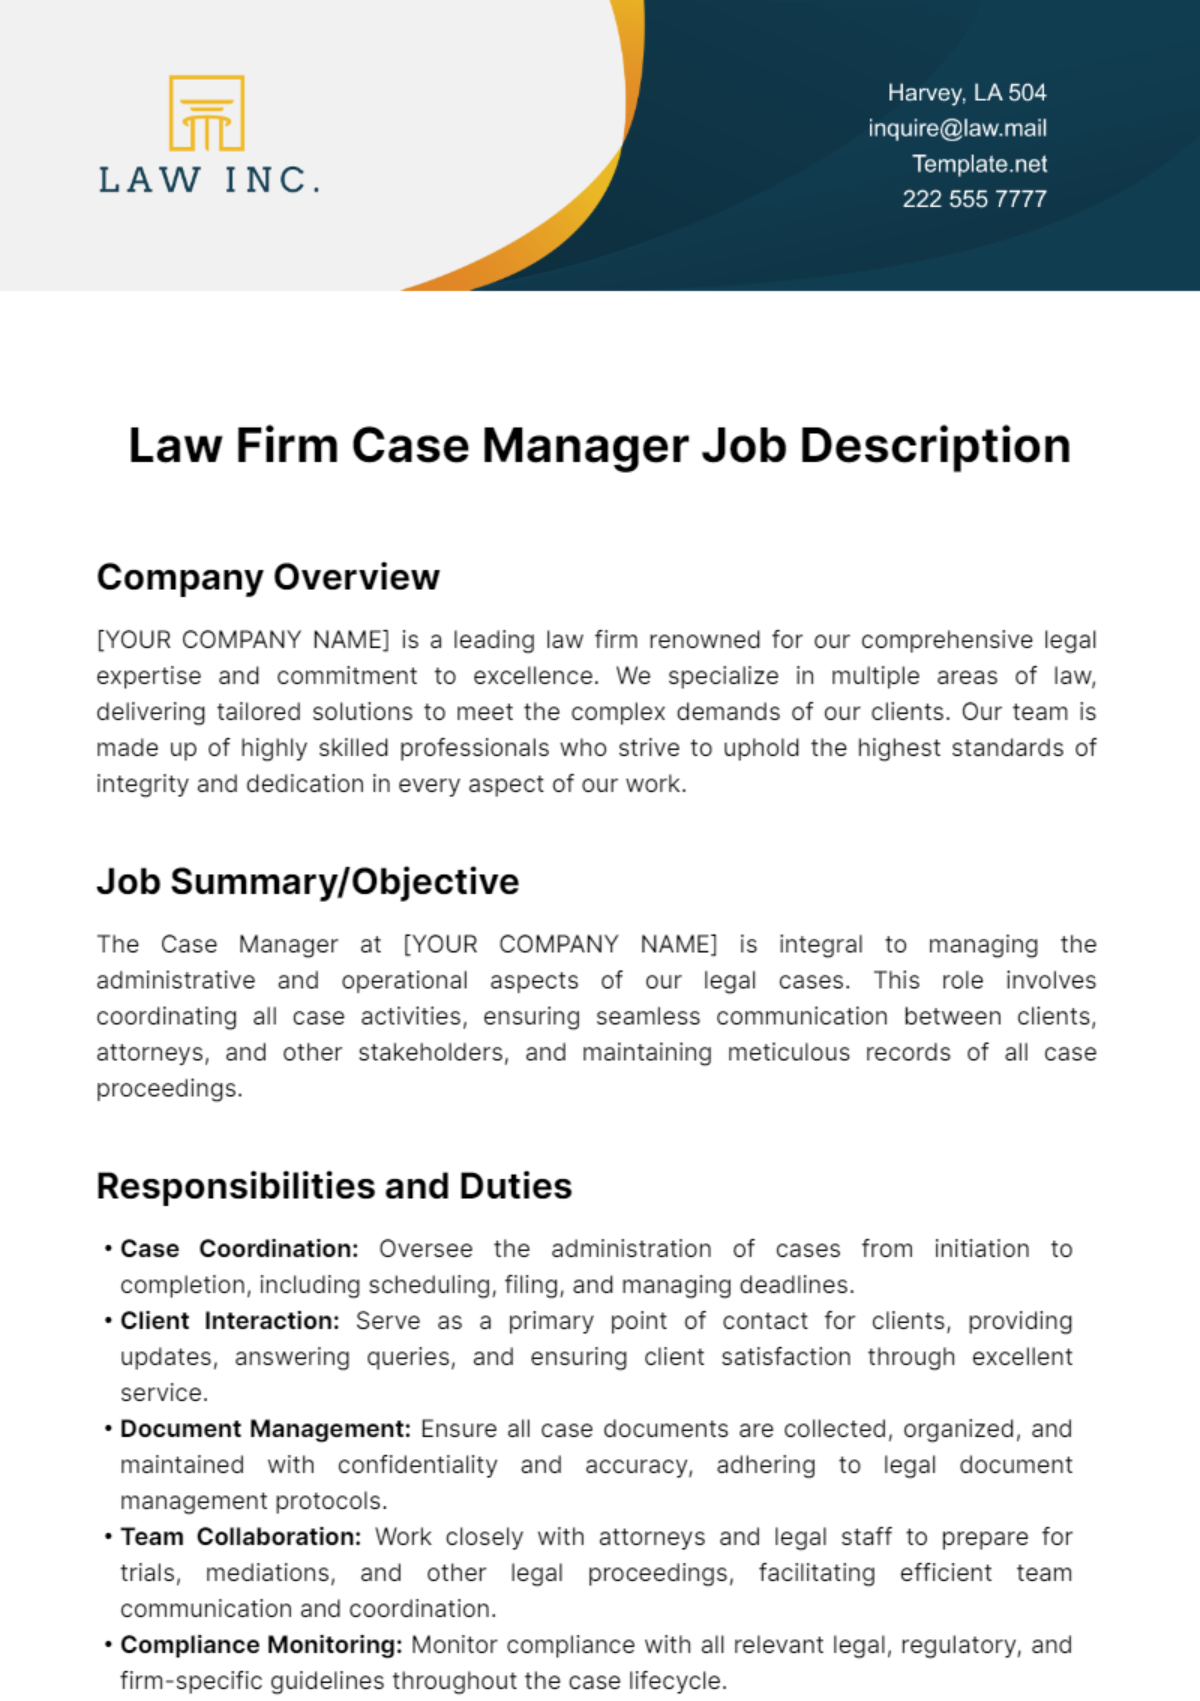 Free Law Firm Case Manager Job Description Template